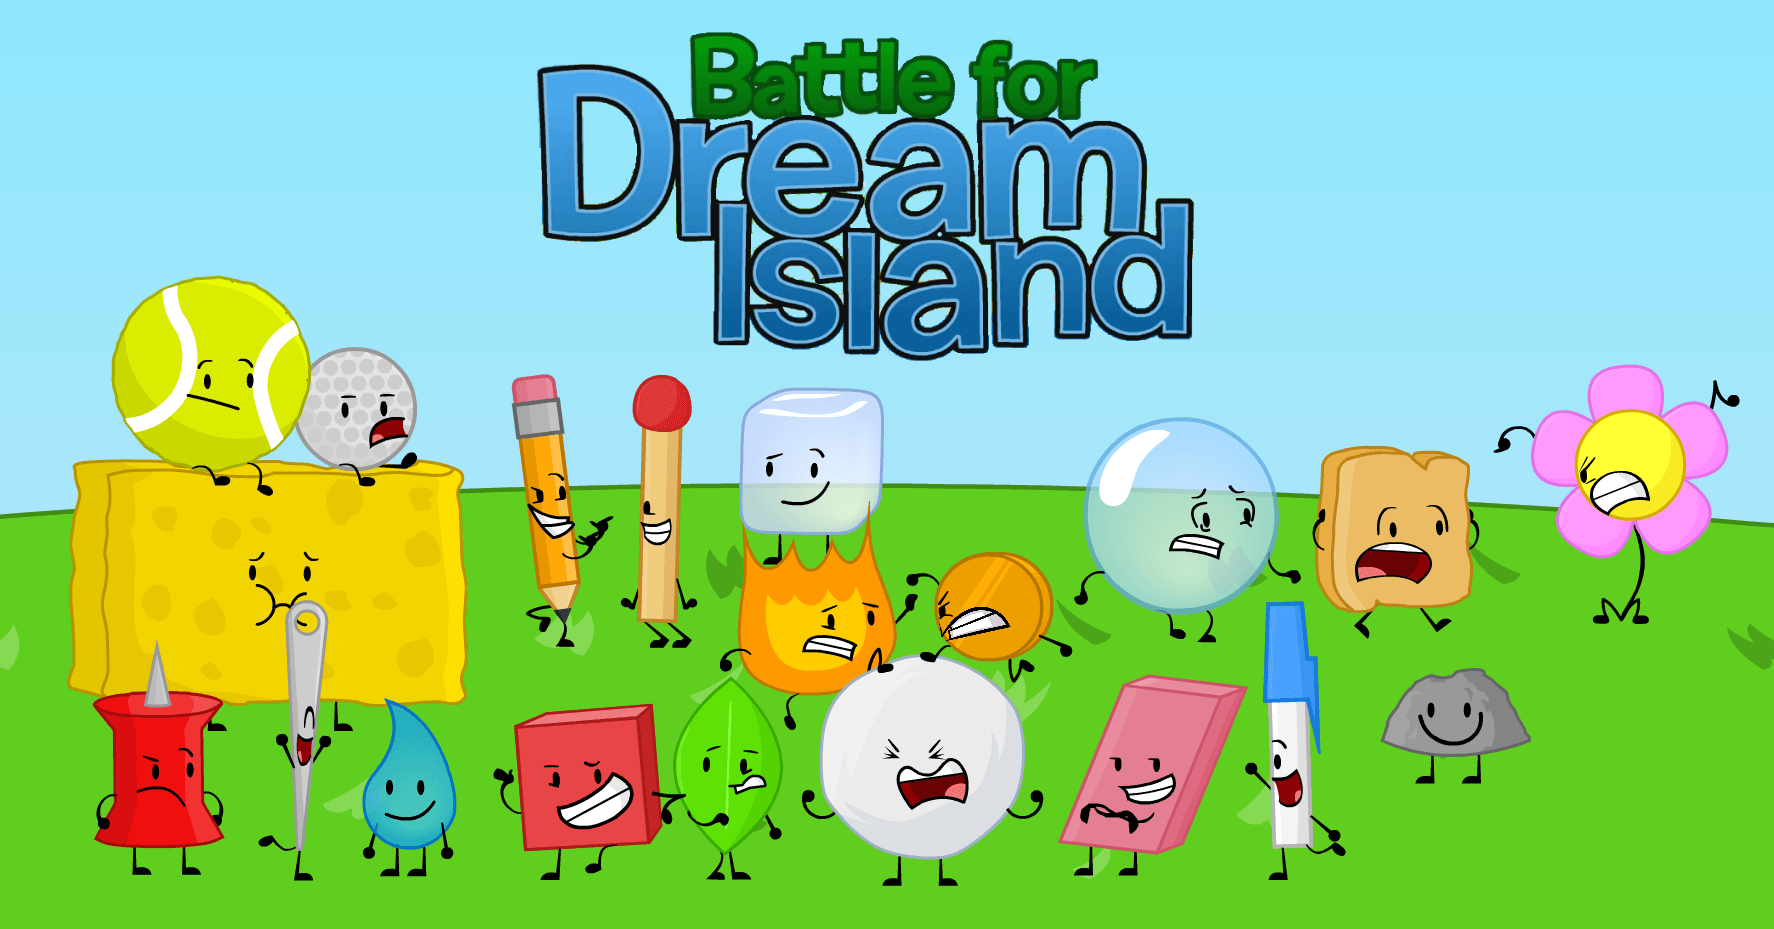 BFDI fond d'écran - Battle for Dream island photo (39868536